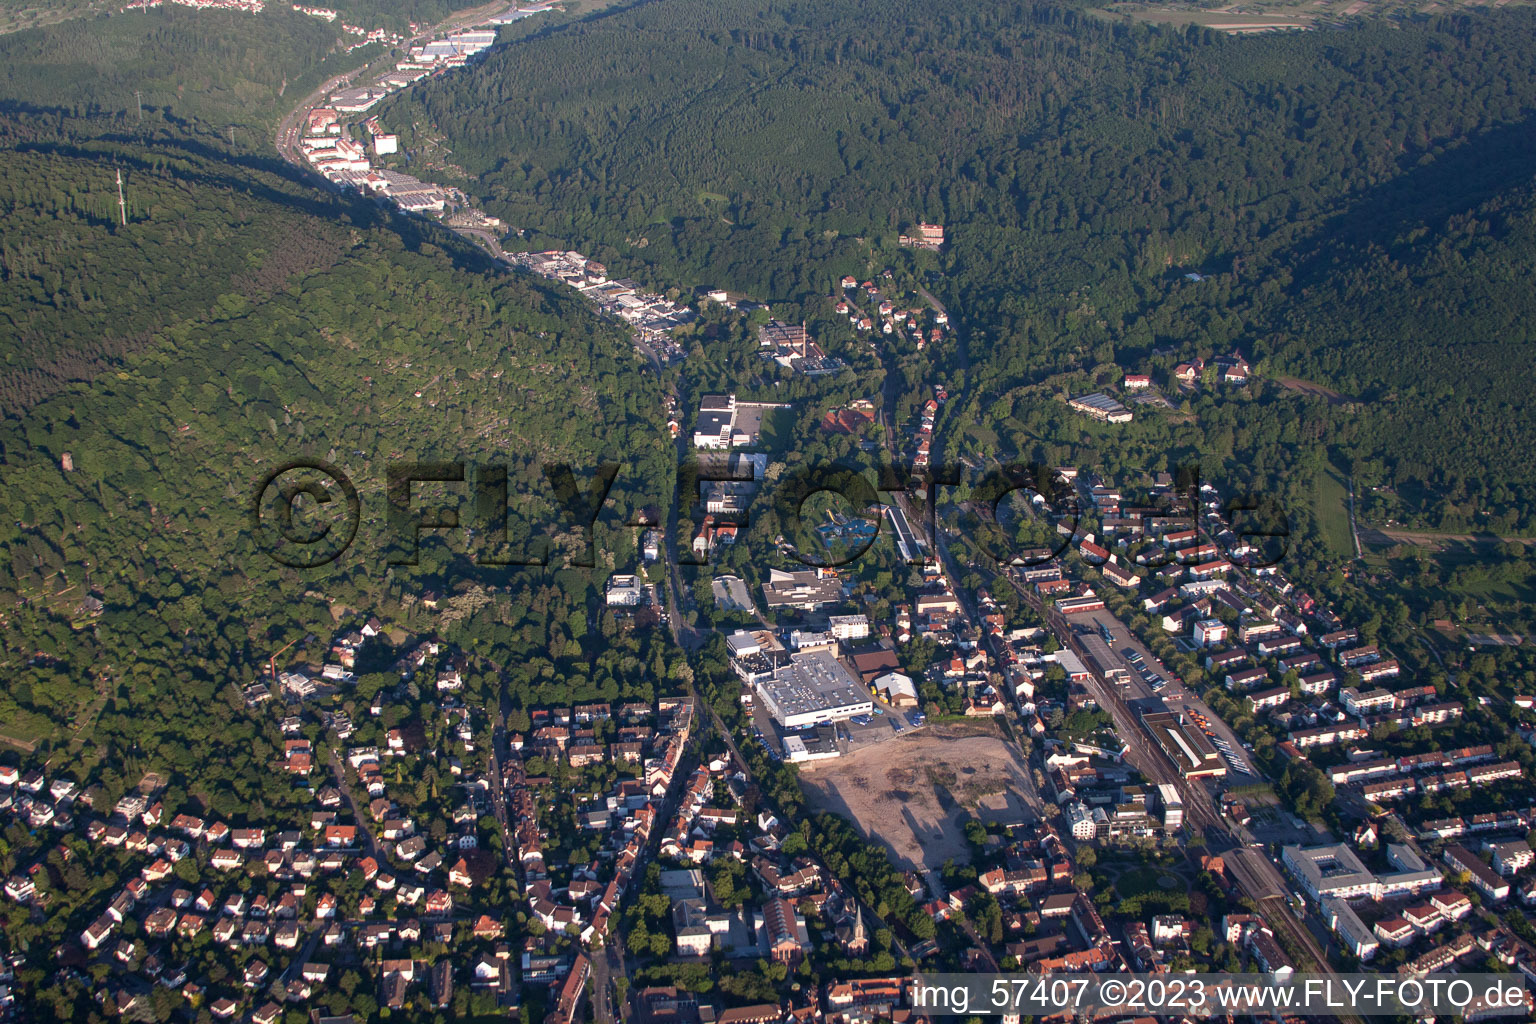 Drone image of Ettlingen in the state Baden-Wuerttemberg, Germany